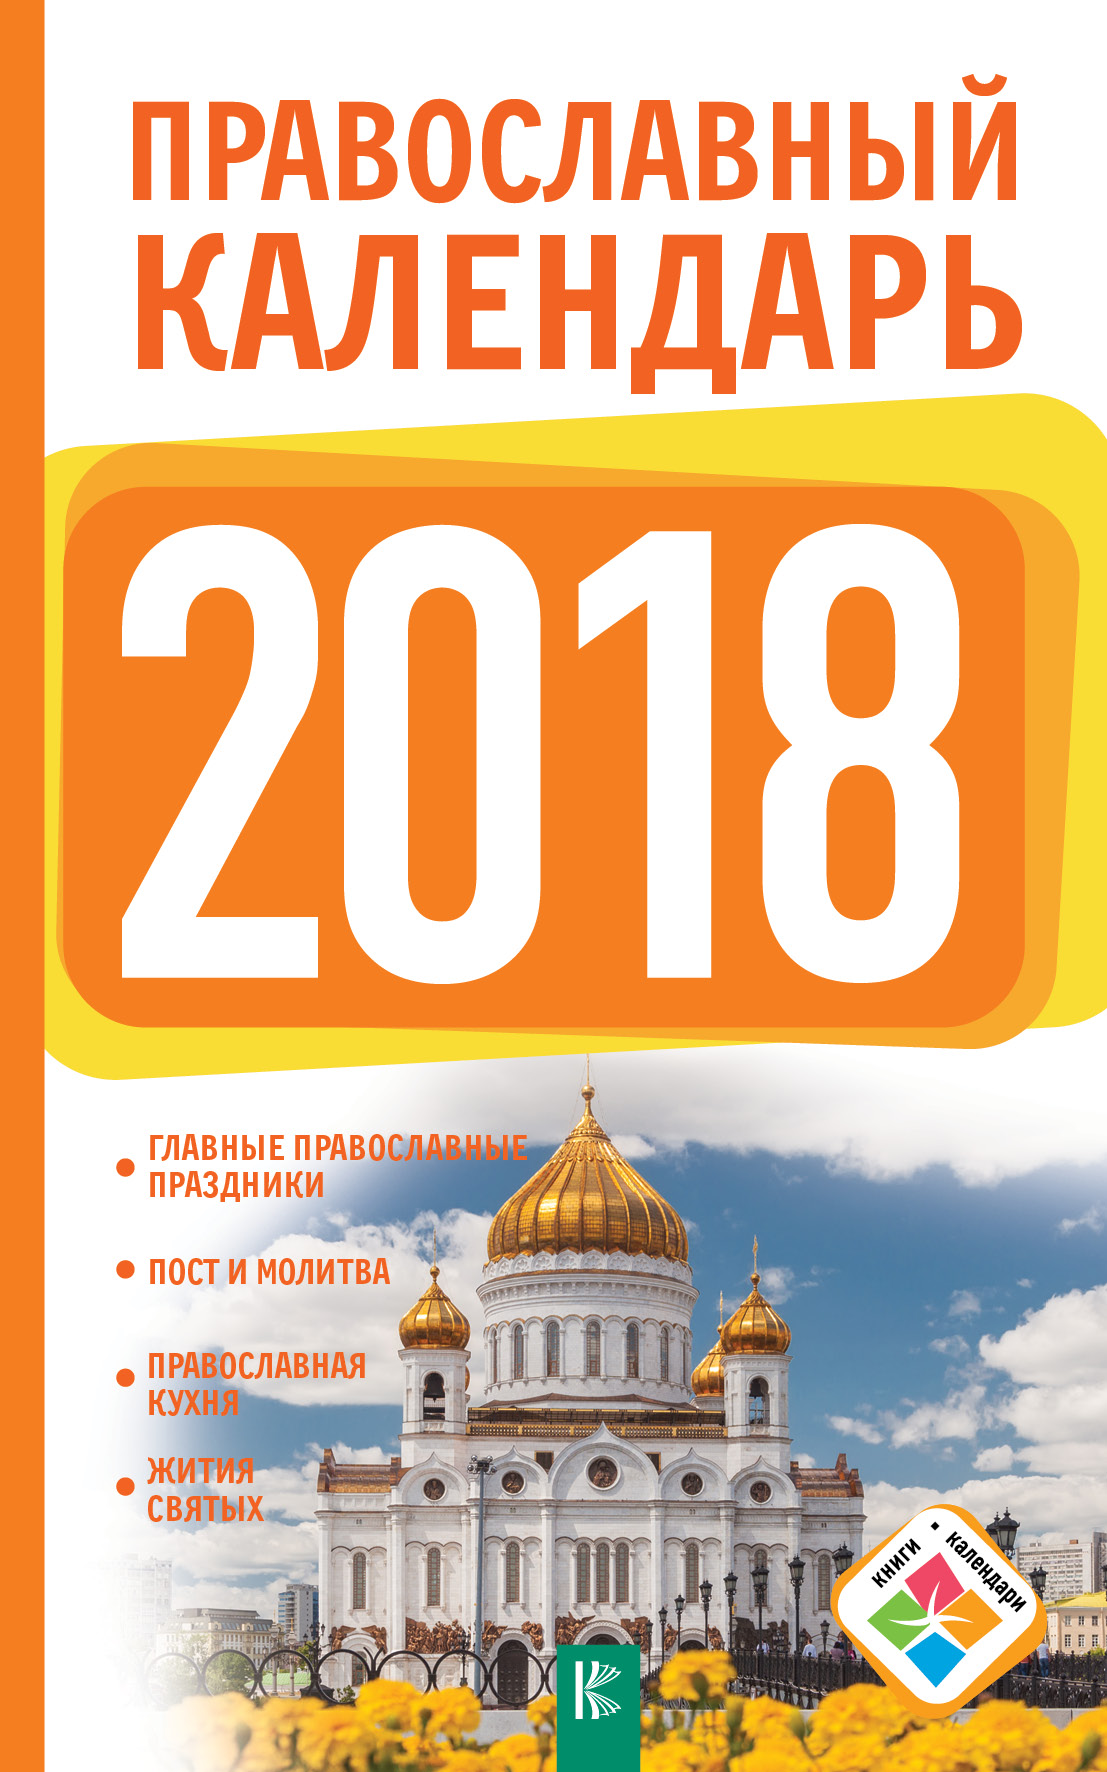 Хорсанд-Мавроматис Диана  Православный календарь на 2018 год - страница 0